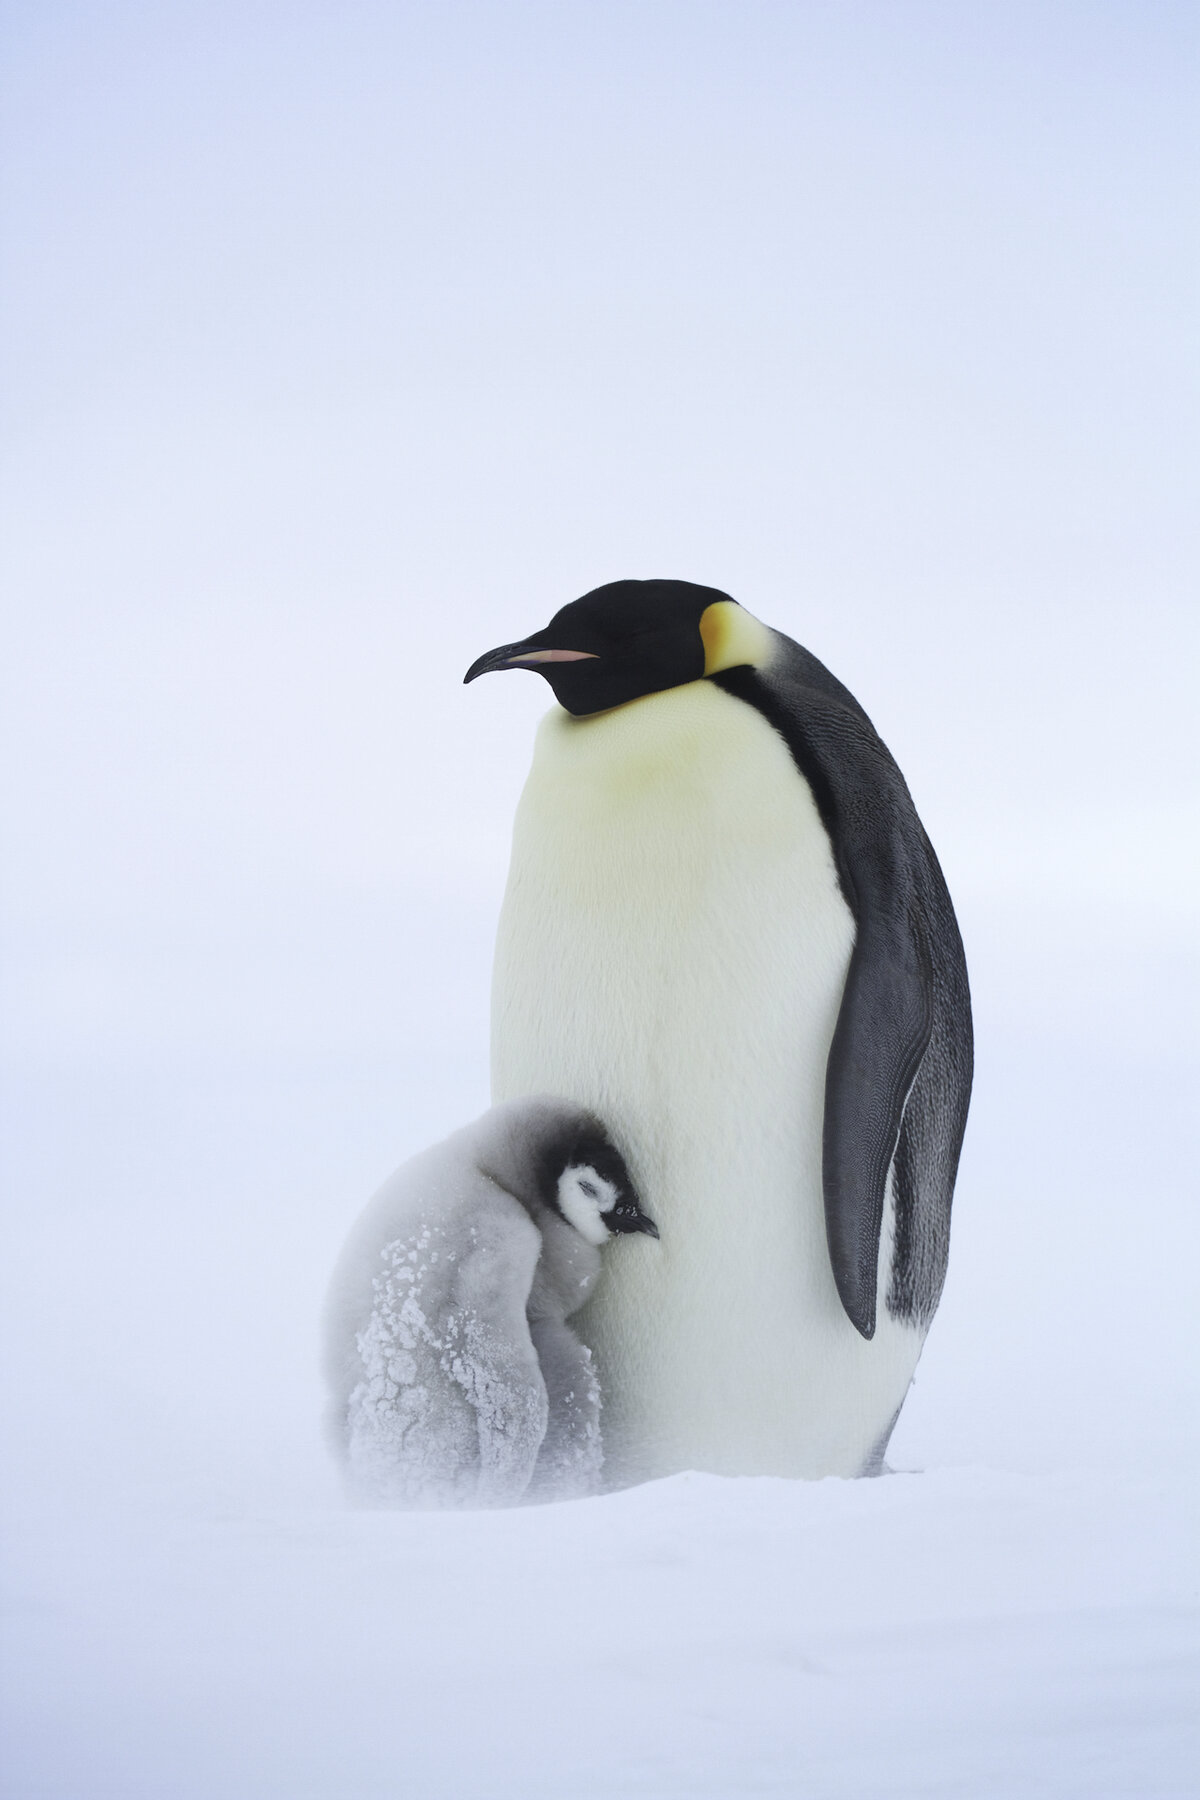 Chick huddles against parent during a snow storm